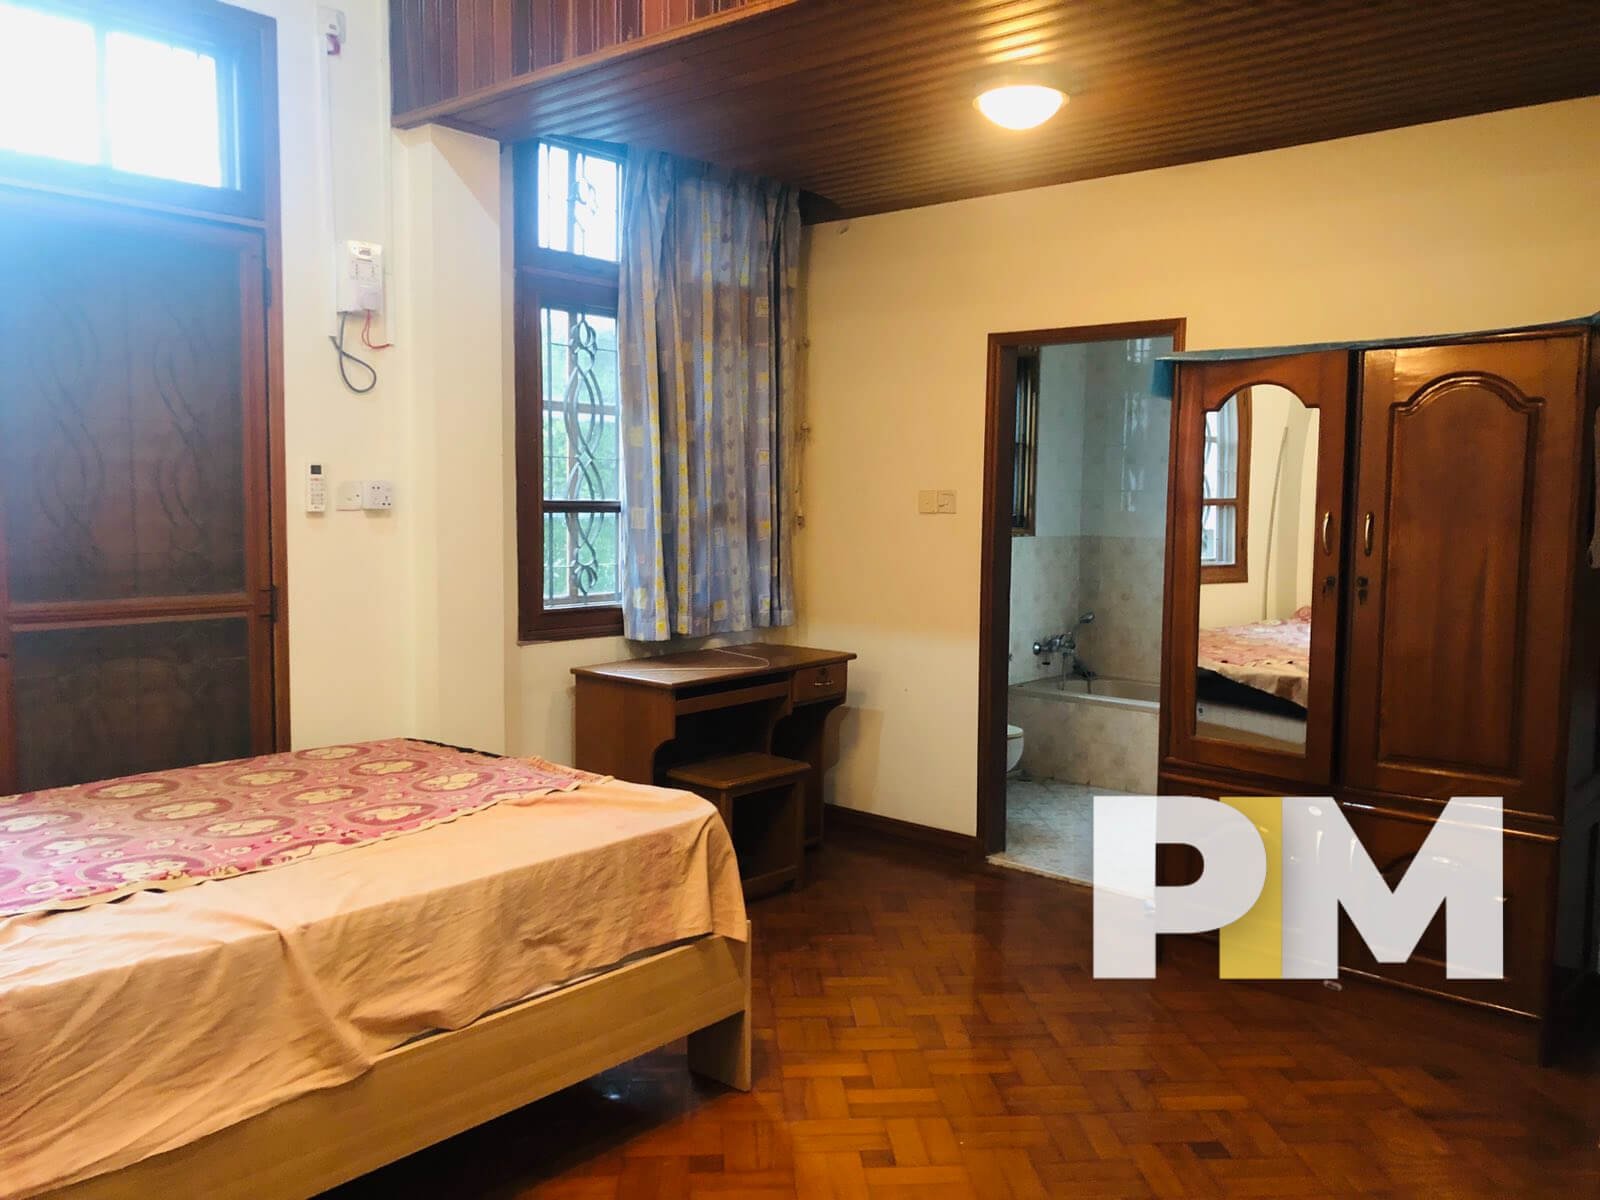 Bedroom with toilet - Myanmar Real Estate